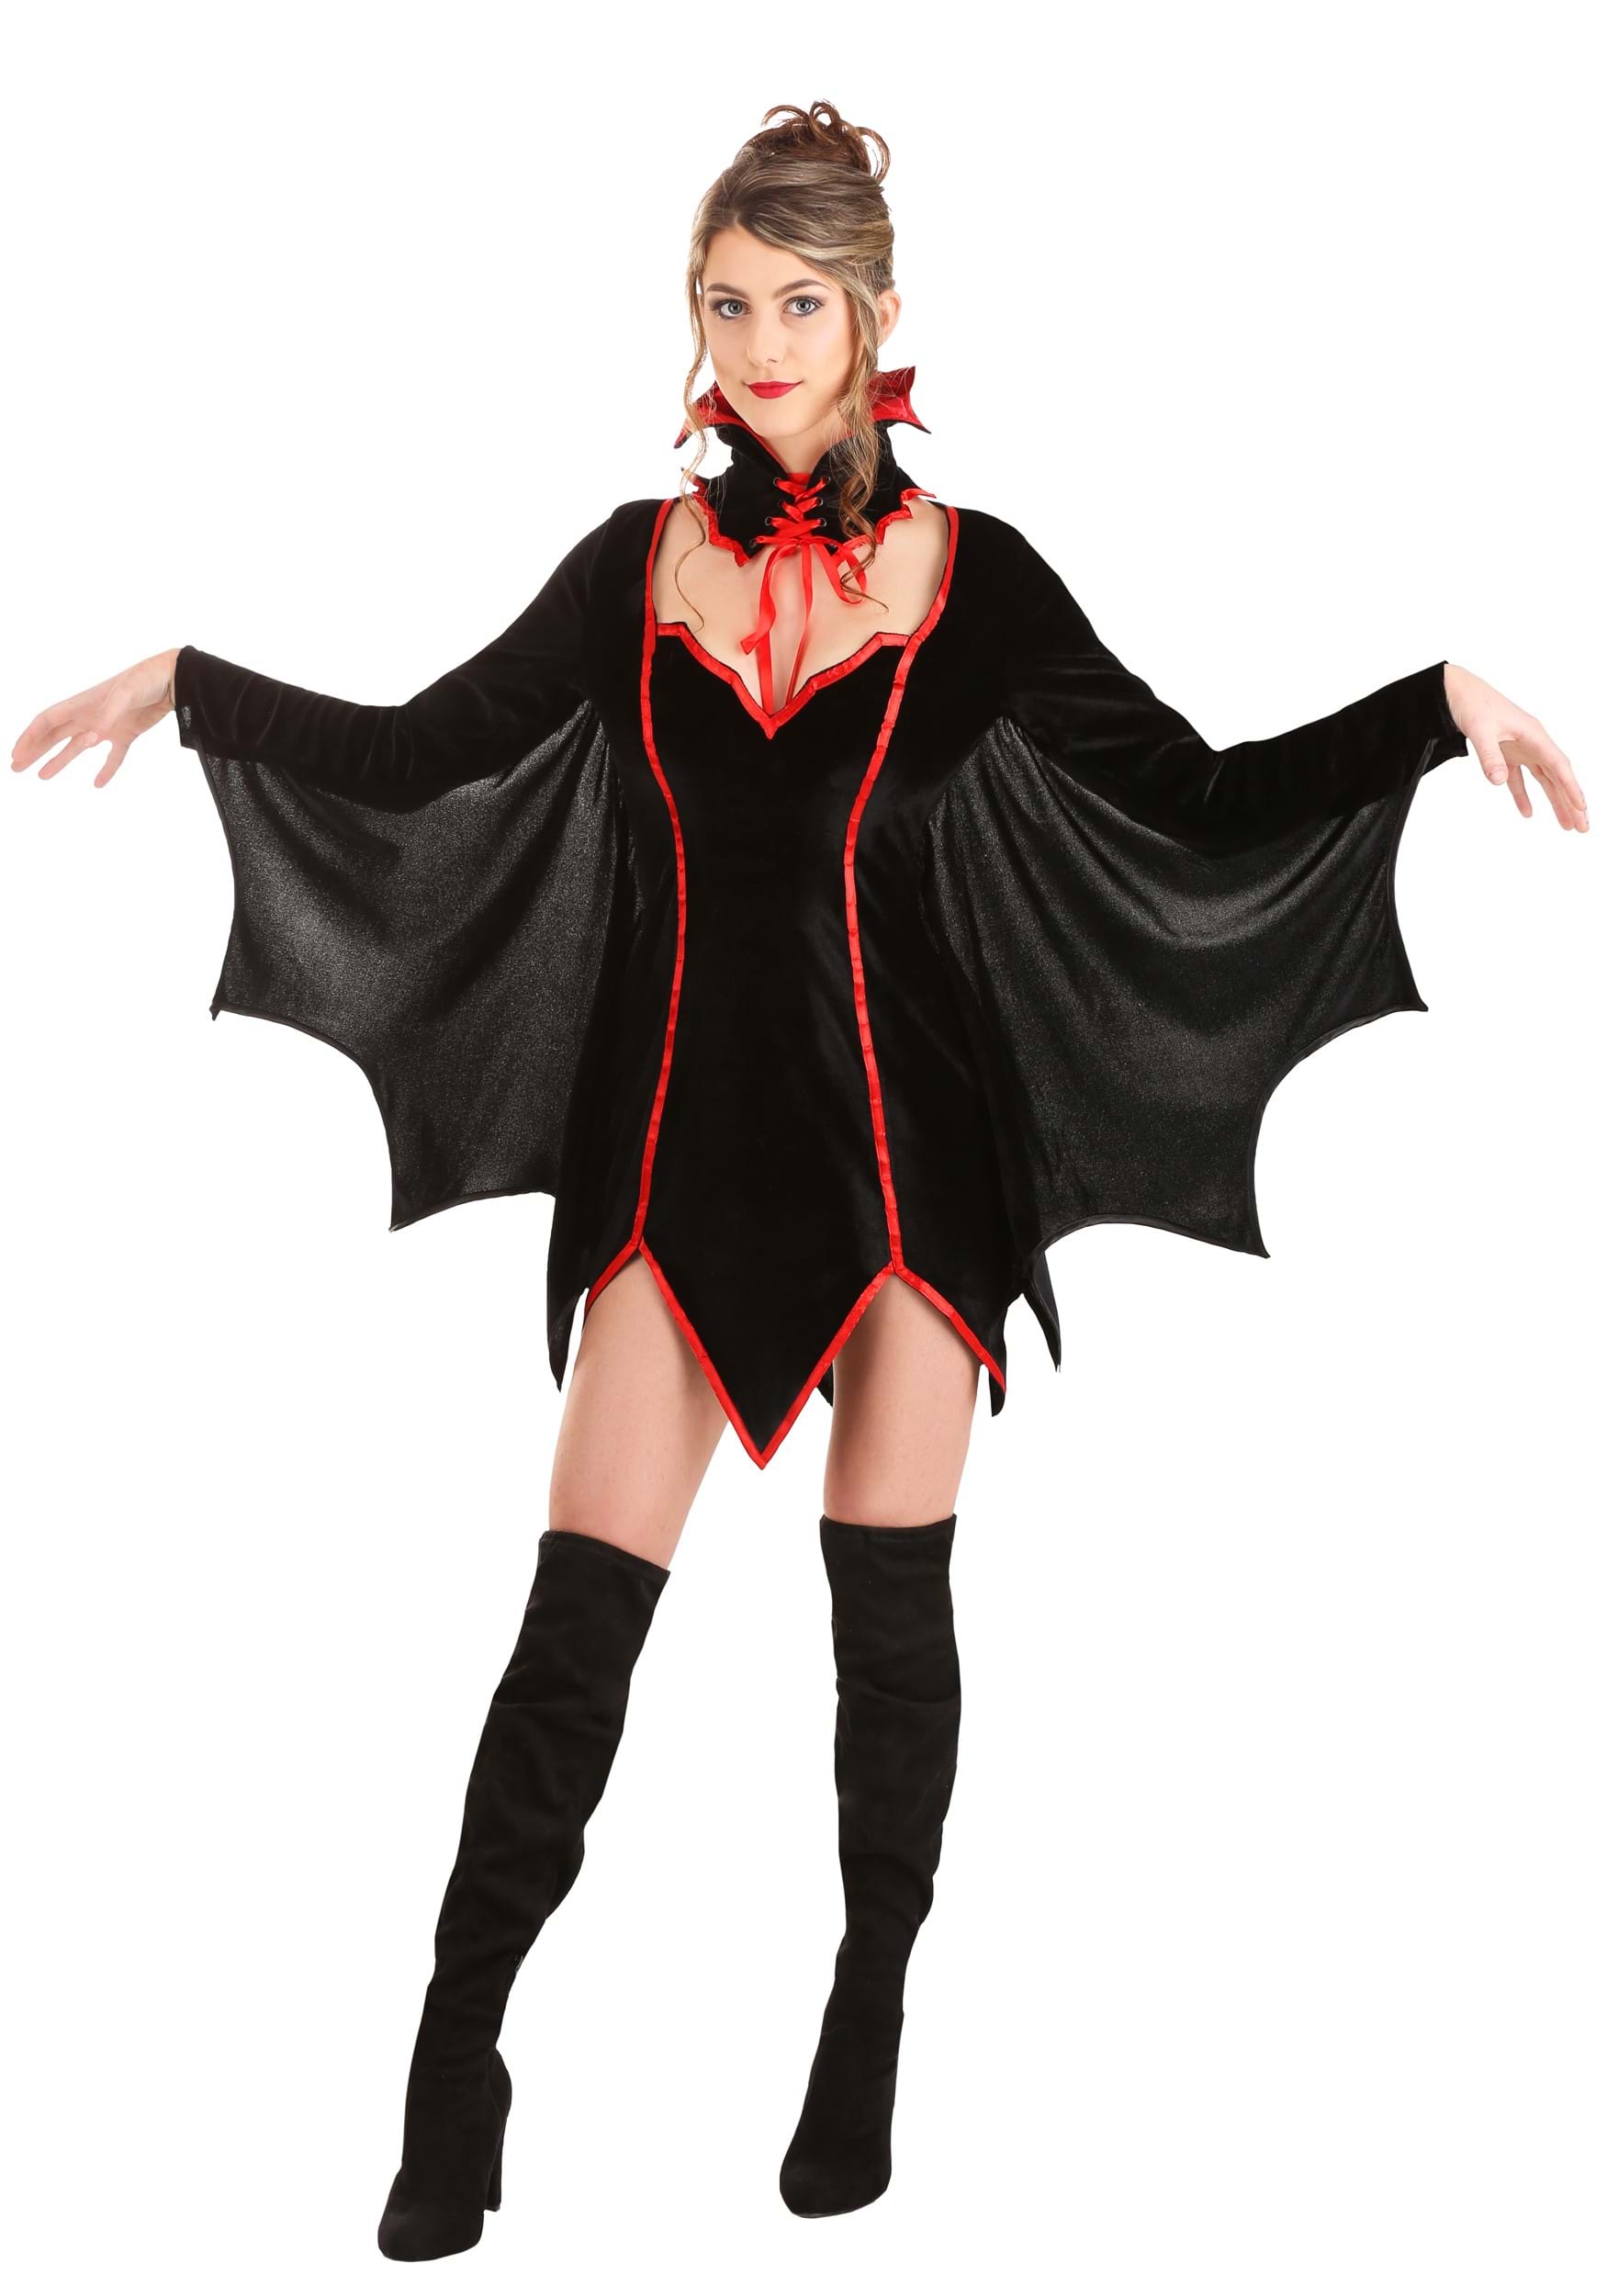 Exclusive Lady Dracula Fancy Dress Costume